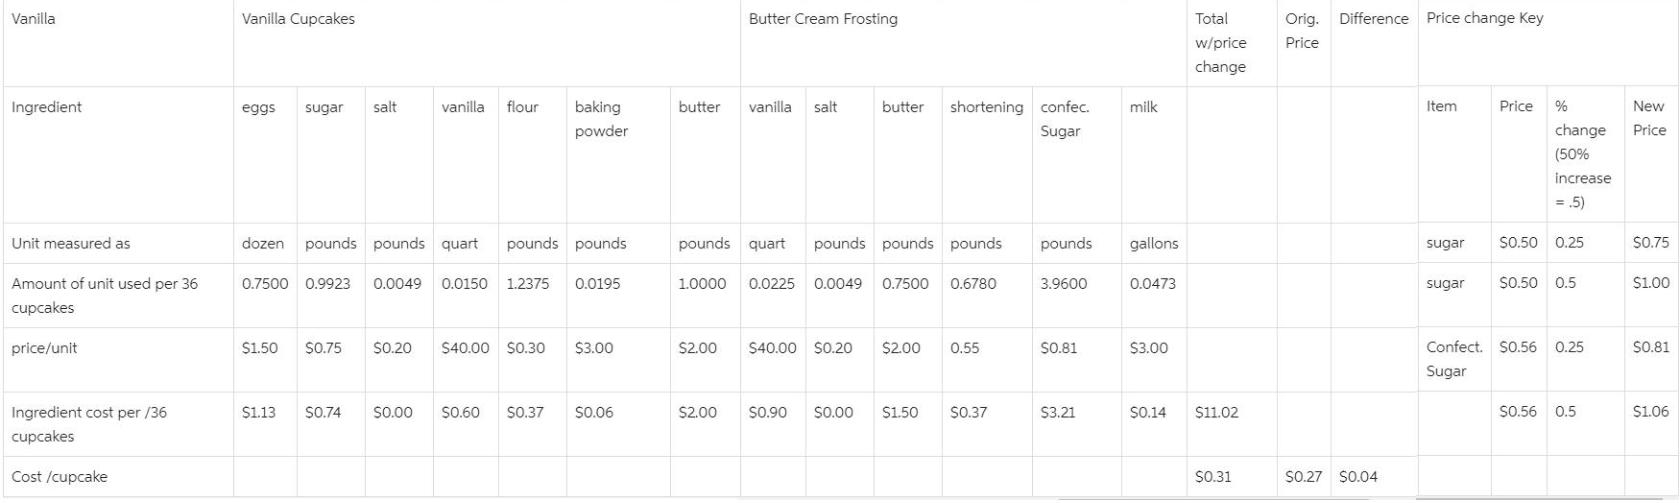 Vanilla Cupcakes Butter Cream Frosting Total Orig. Difference Price change Key Vanilla w/price Price change shortening c